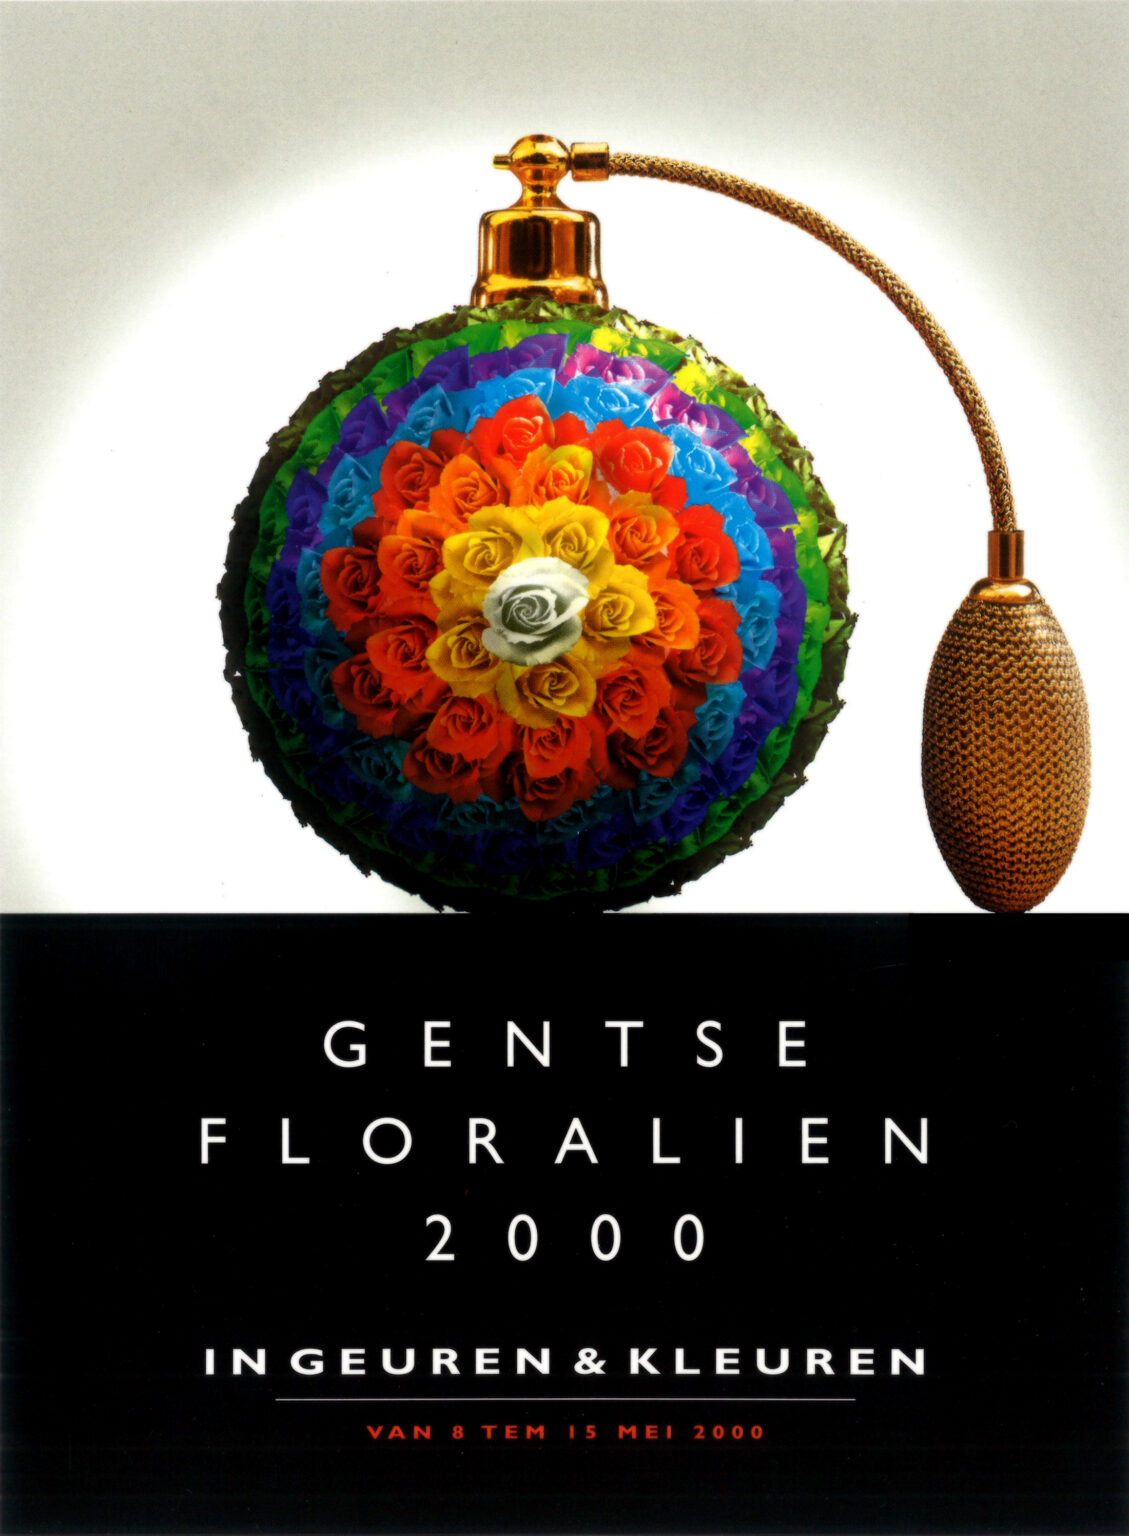 Gentse Floraliën campaign by Vandekerckhove & Devos